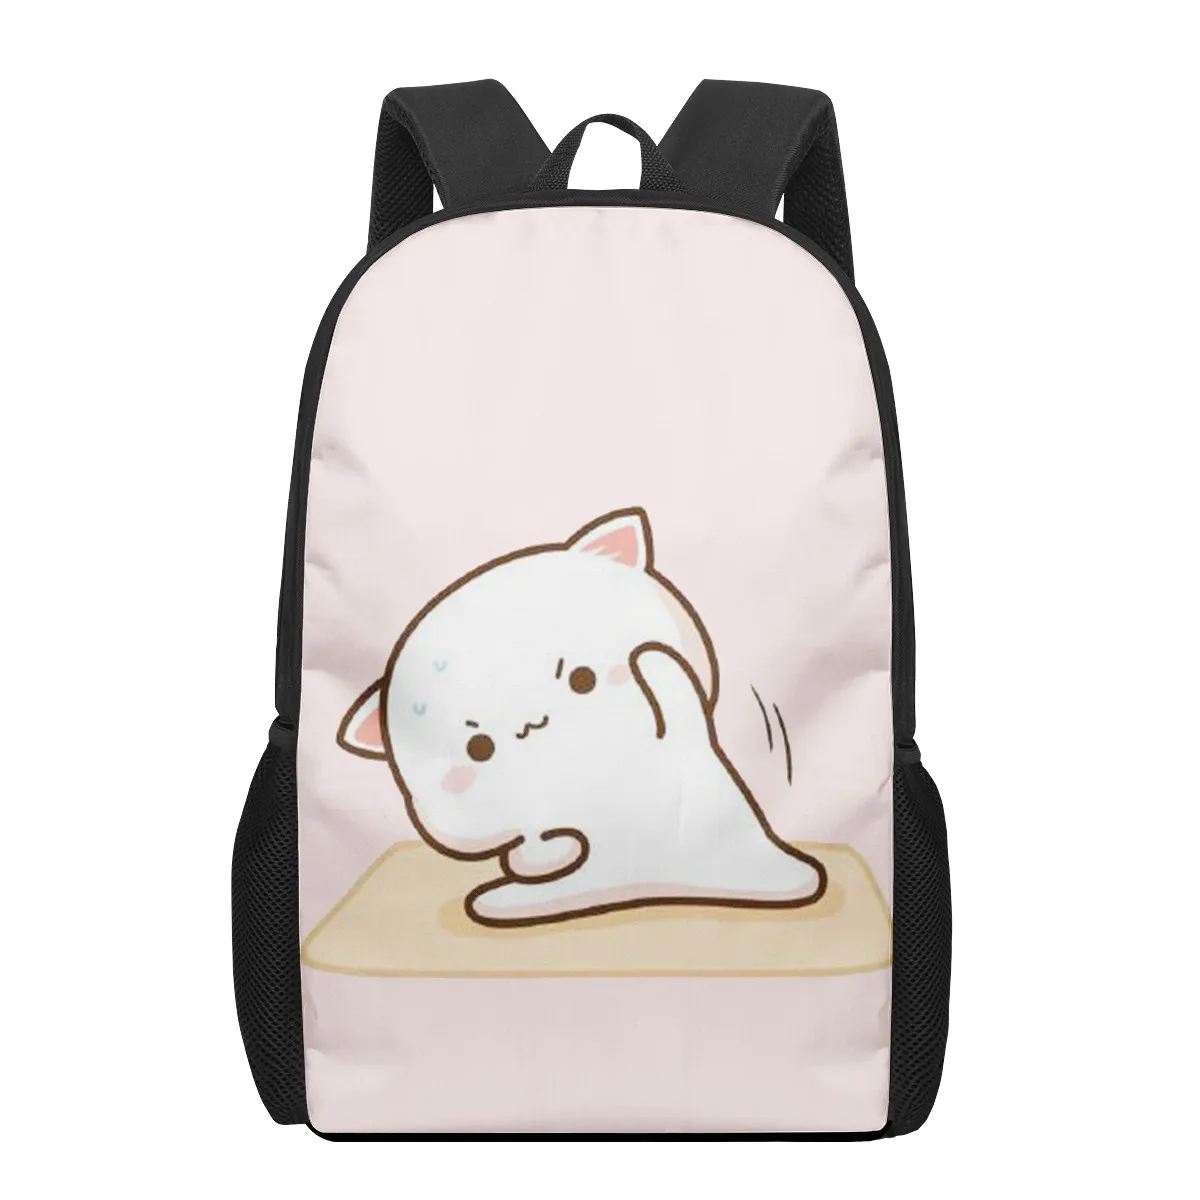 Peach Cat Cartoon cute 3D Pattern School Bag for Children Girls Boys Casual Book Bags Kids Backpack Boys Girls Schoolbags Bagpac